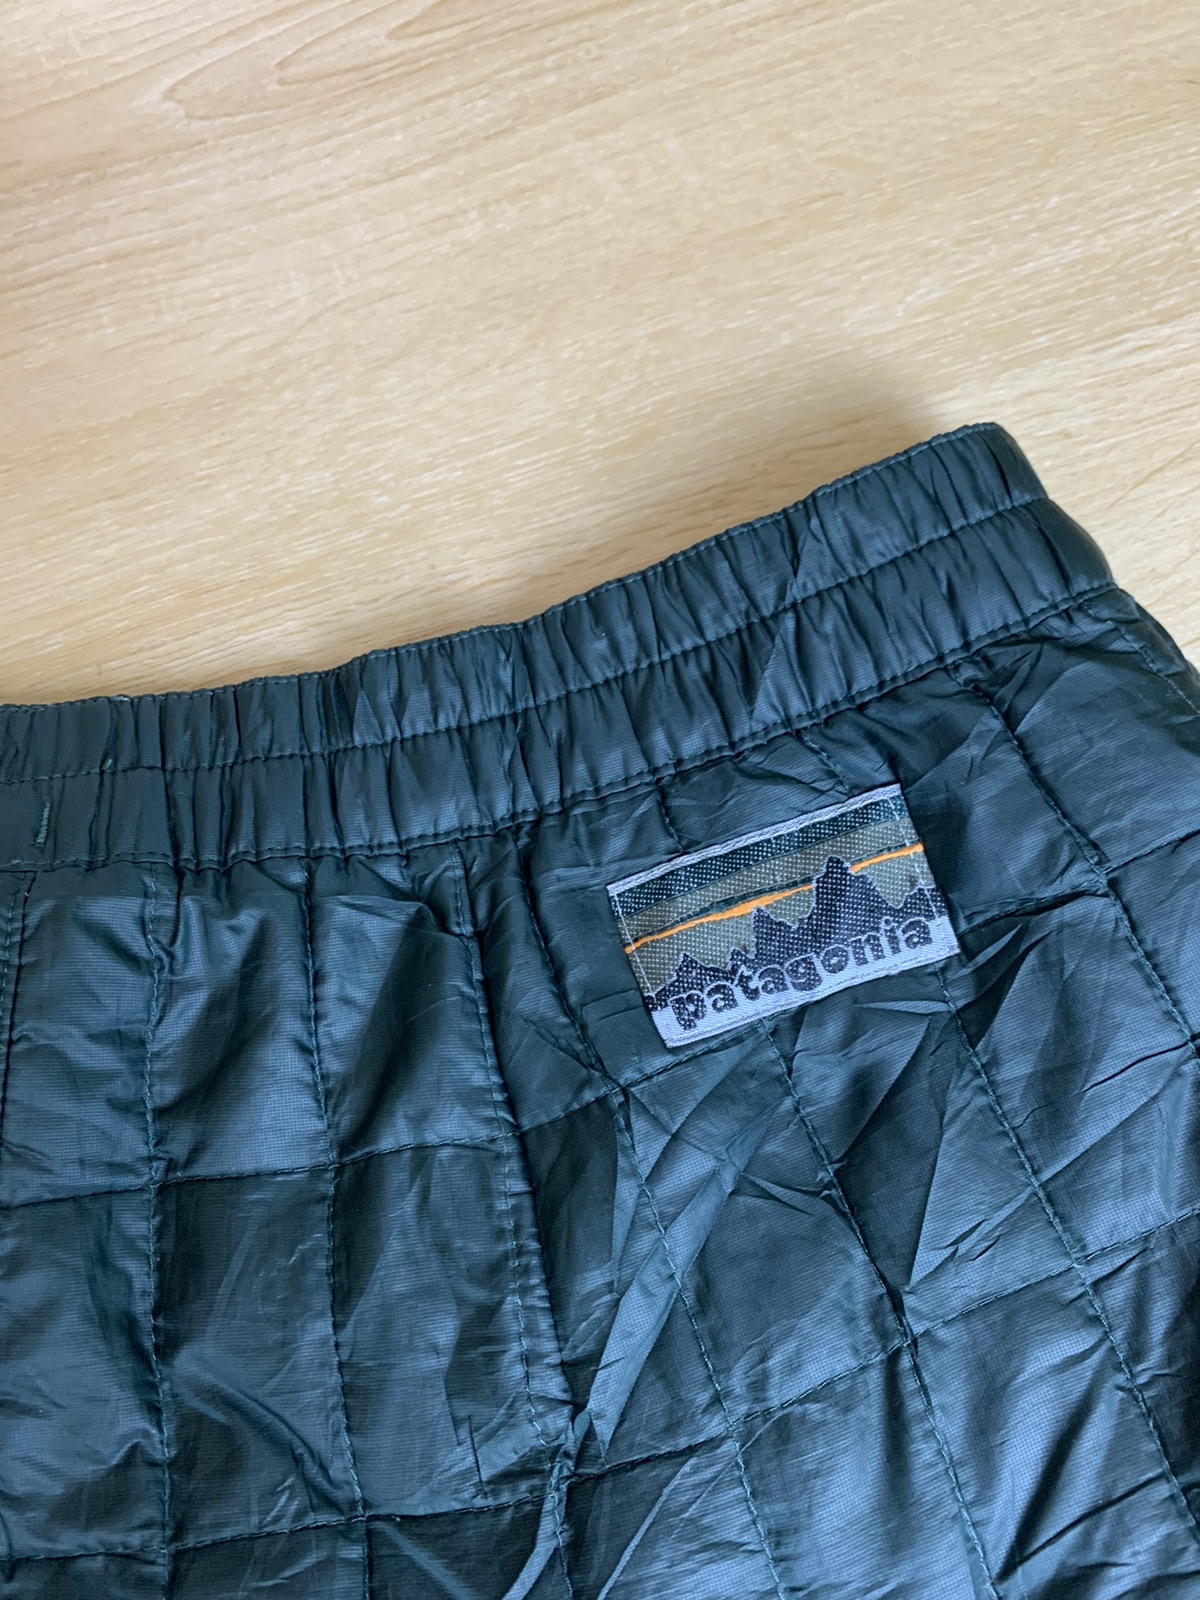 patagonia mini skirt nice design - 5